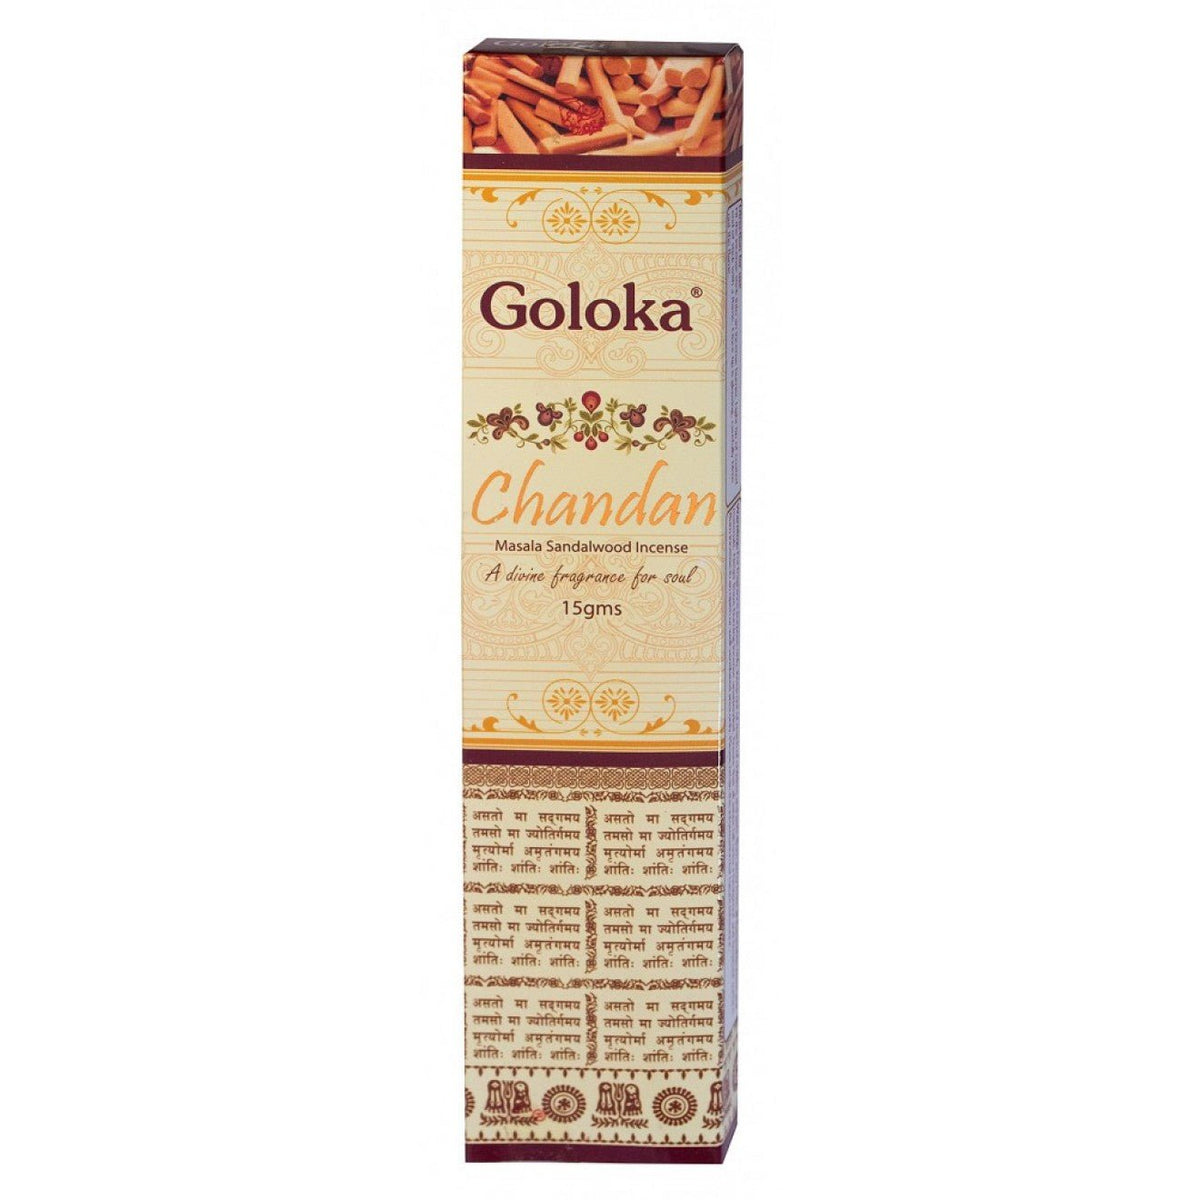 Goloka Incense "Chandan" 15gr. - Das Raeucherwerk